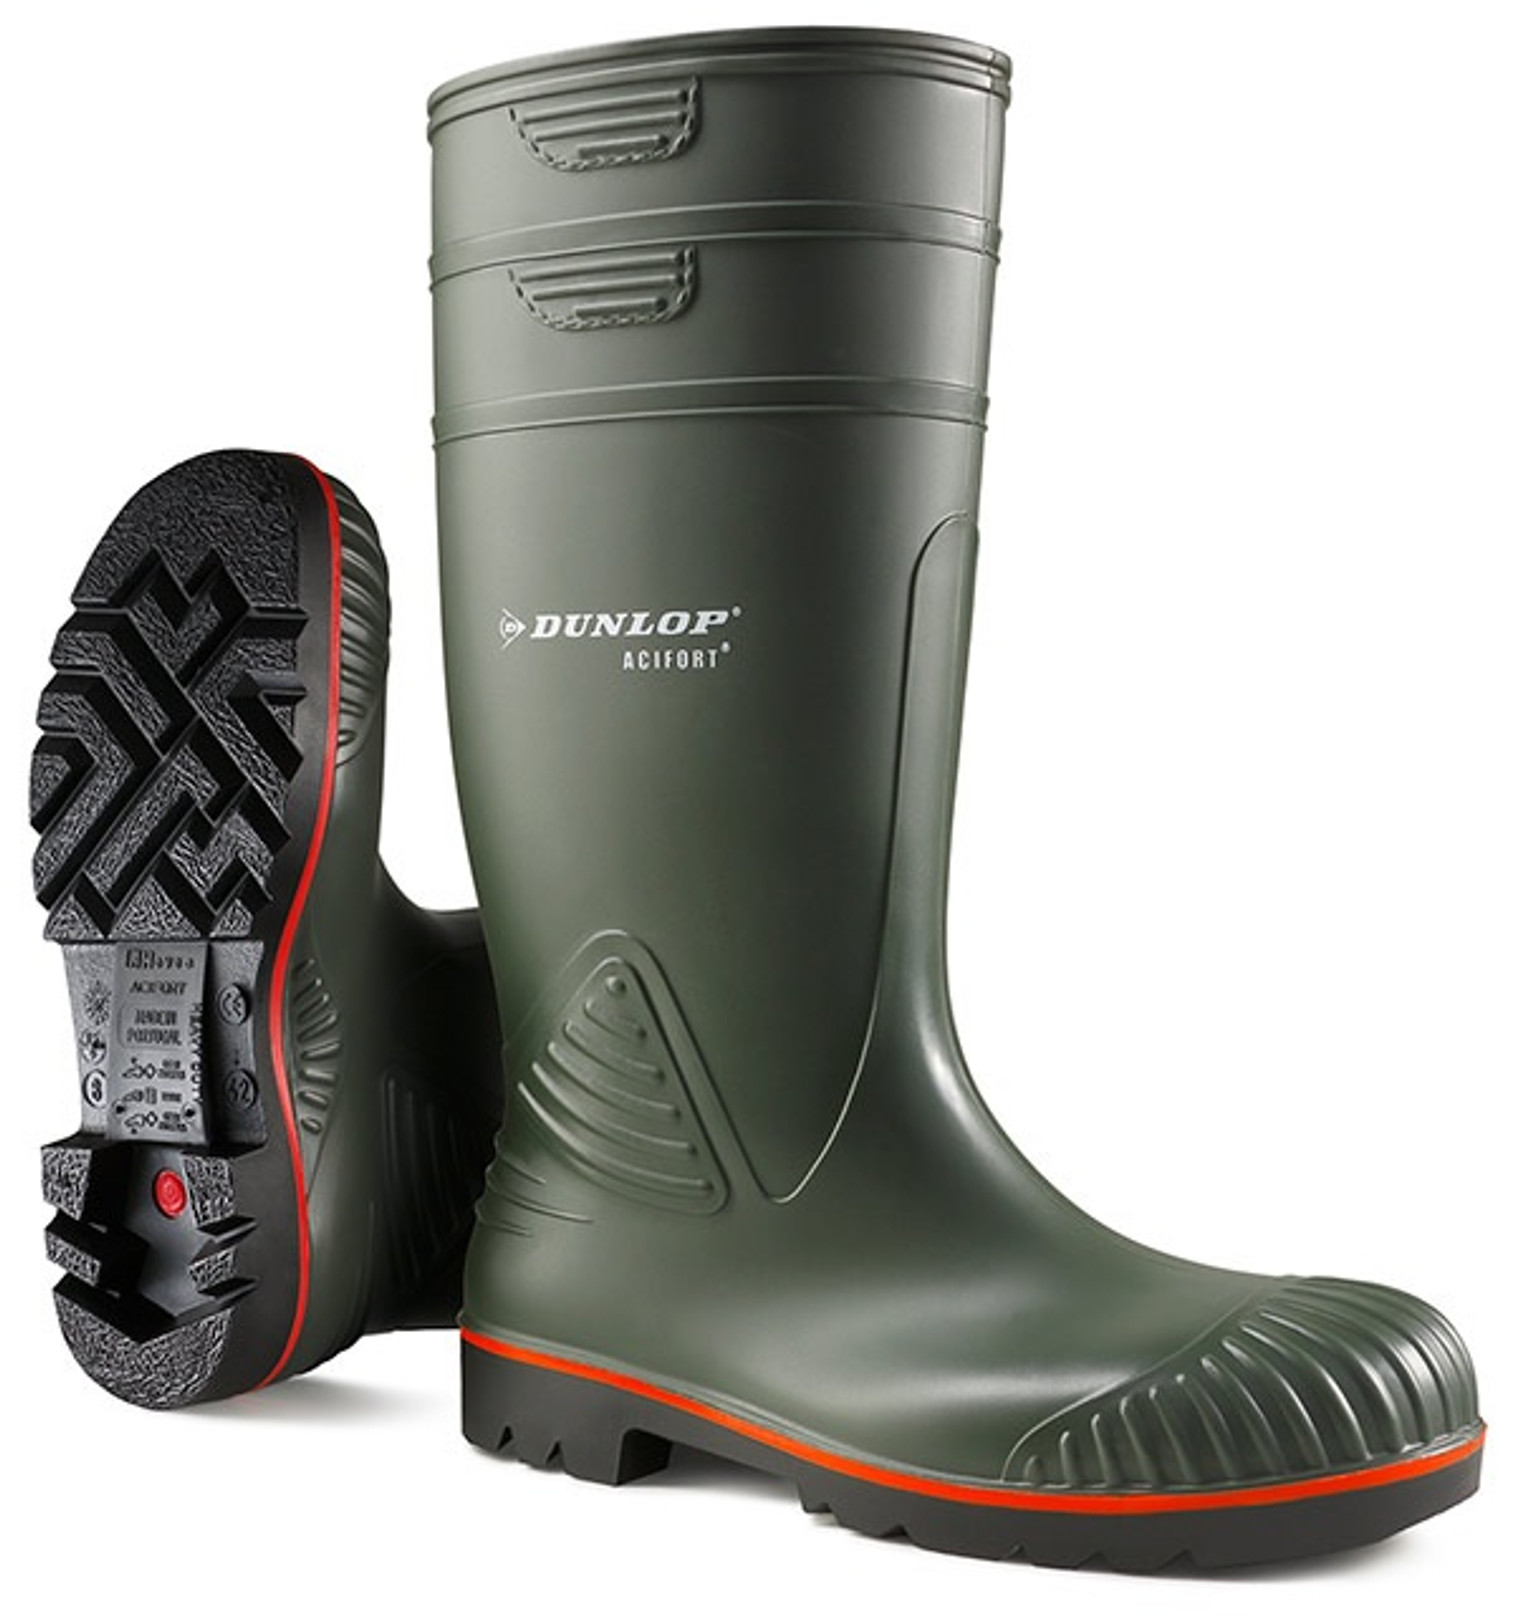 Dunlop Boot Acifort W/Cap